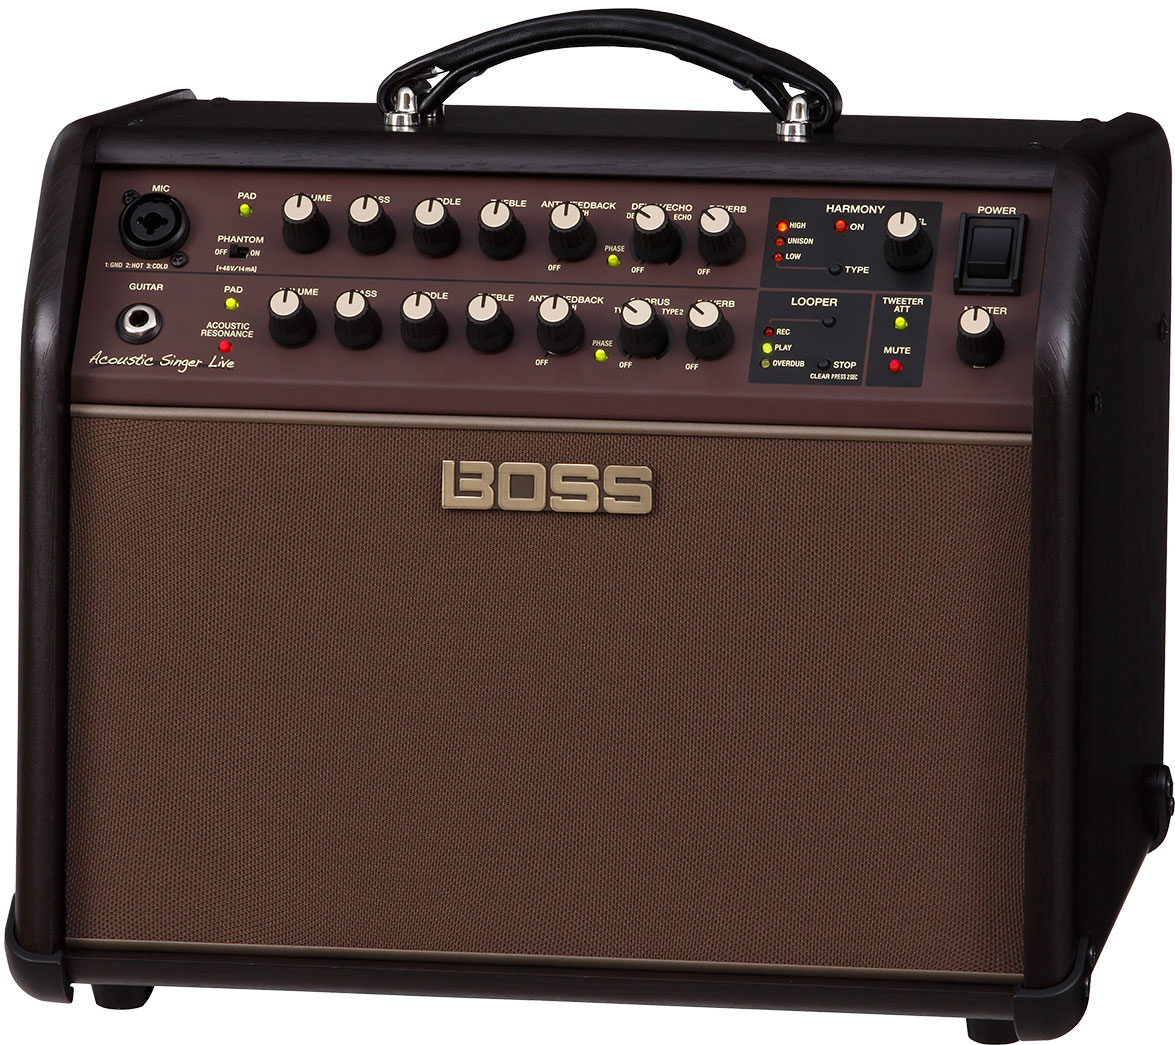 Boss Acoustic Singer Live 60w 1x6.5 - Acoustic guitar combo amp - Variation 1